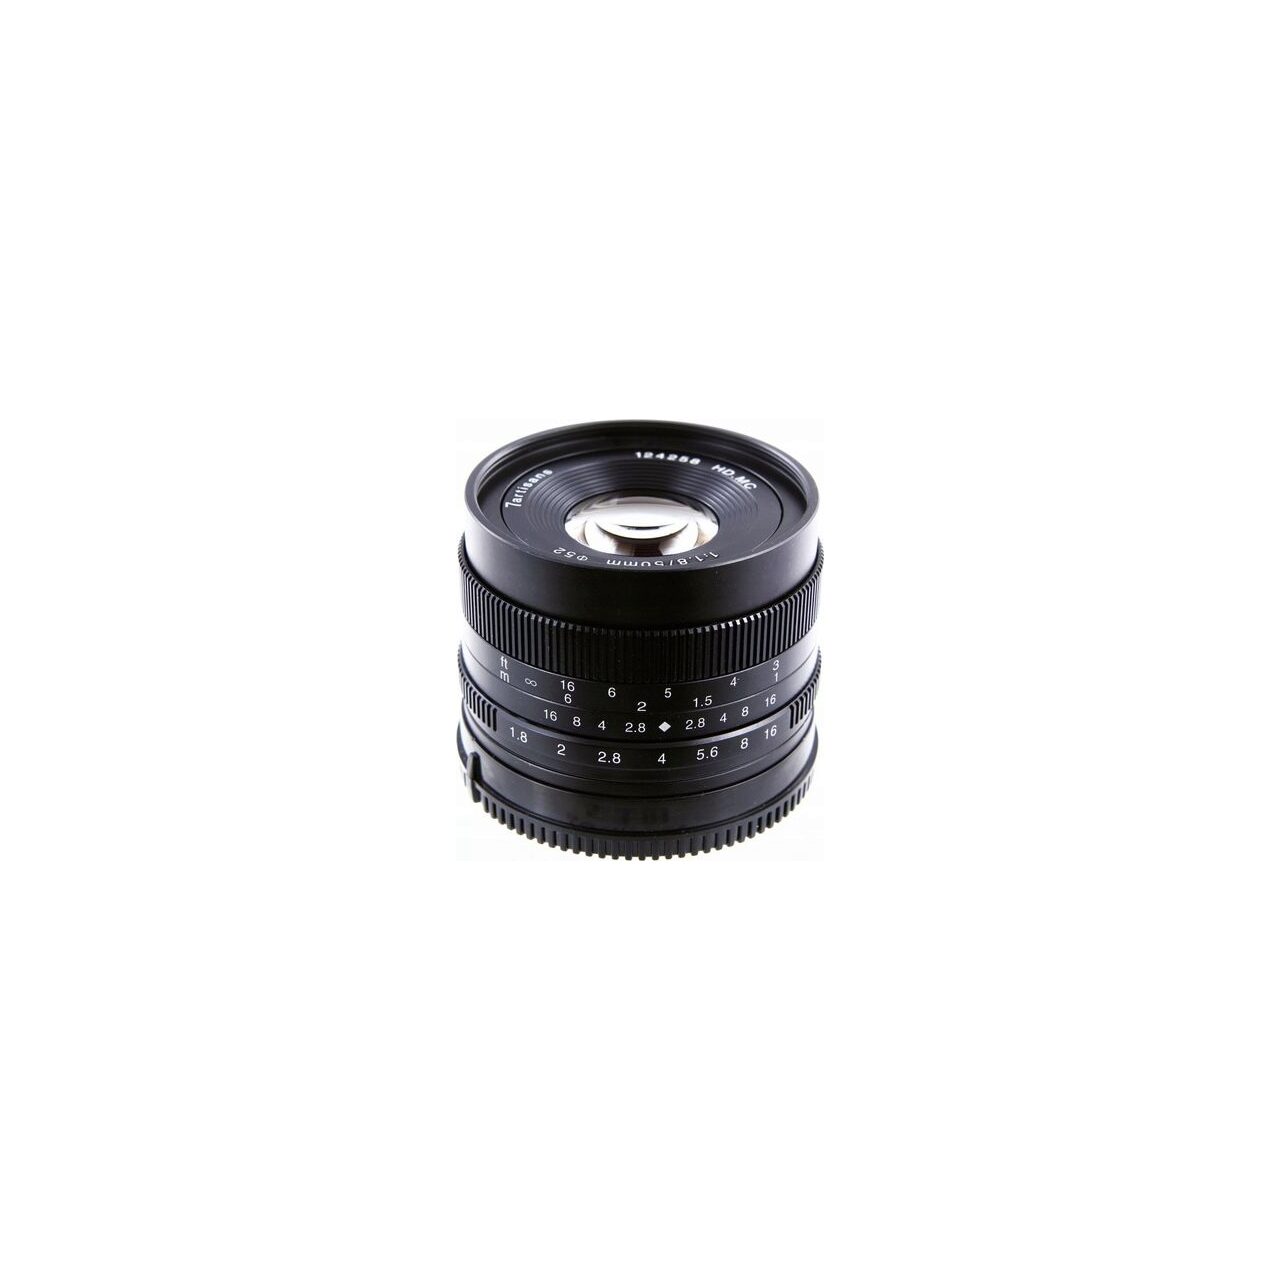 Obiective - Obiectiv 7 artisans 50mm F1.8 APS-C pentru Sony E-mount - livrat vrac